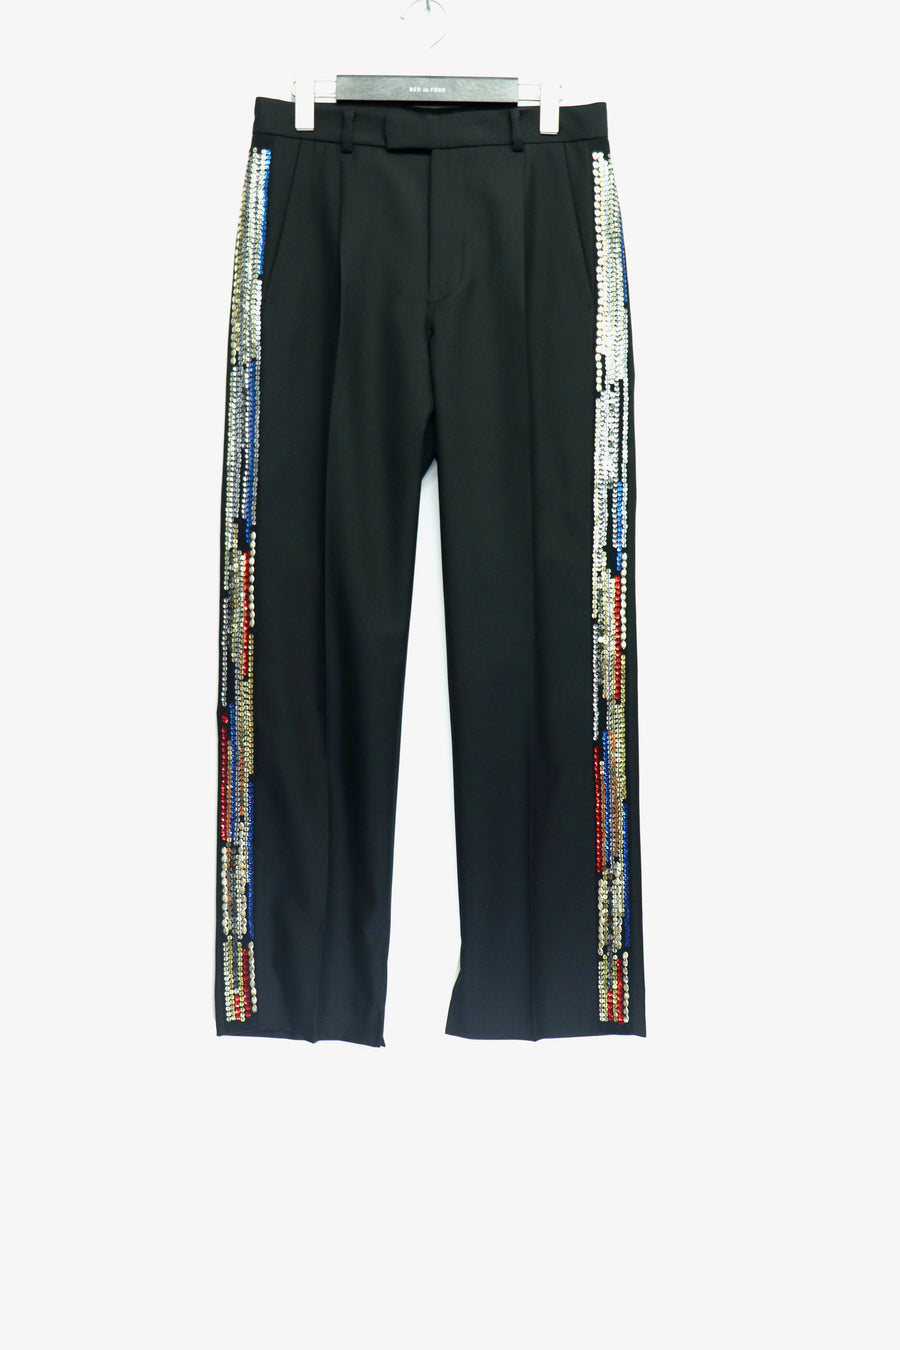 BED j.w. FORD  Glitter Side Stripe Pants(BLACK)